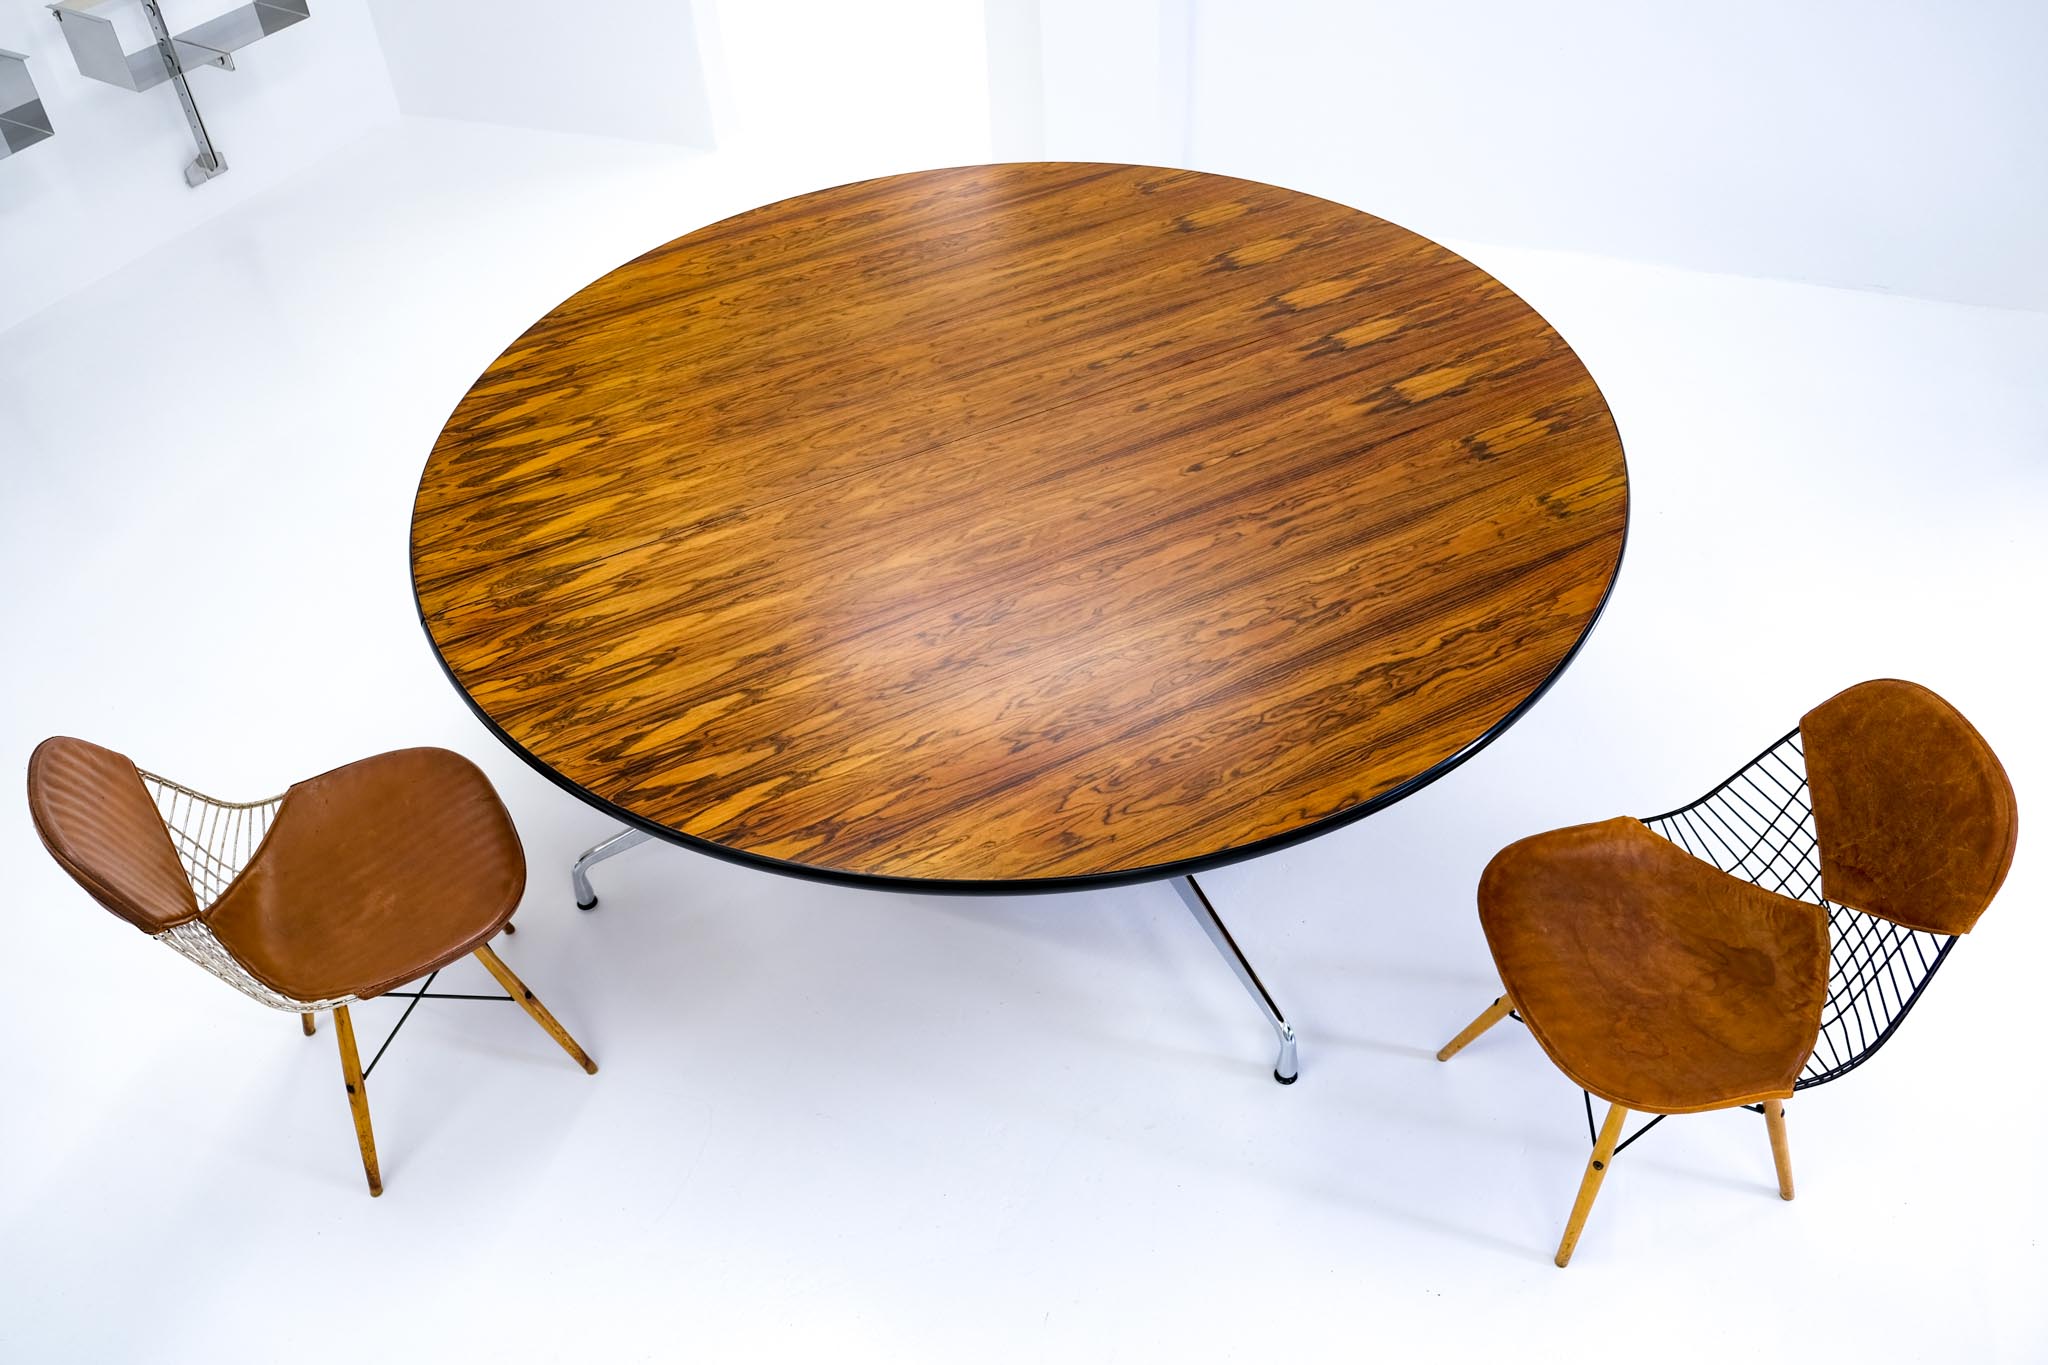 Segmented Table, Herman Miller, Vitra, Brazilian Rosewood, Rio Palisander, CITES, Eames, Ray Eames, Charles Eames,